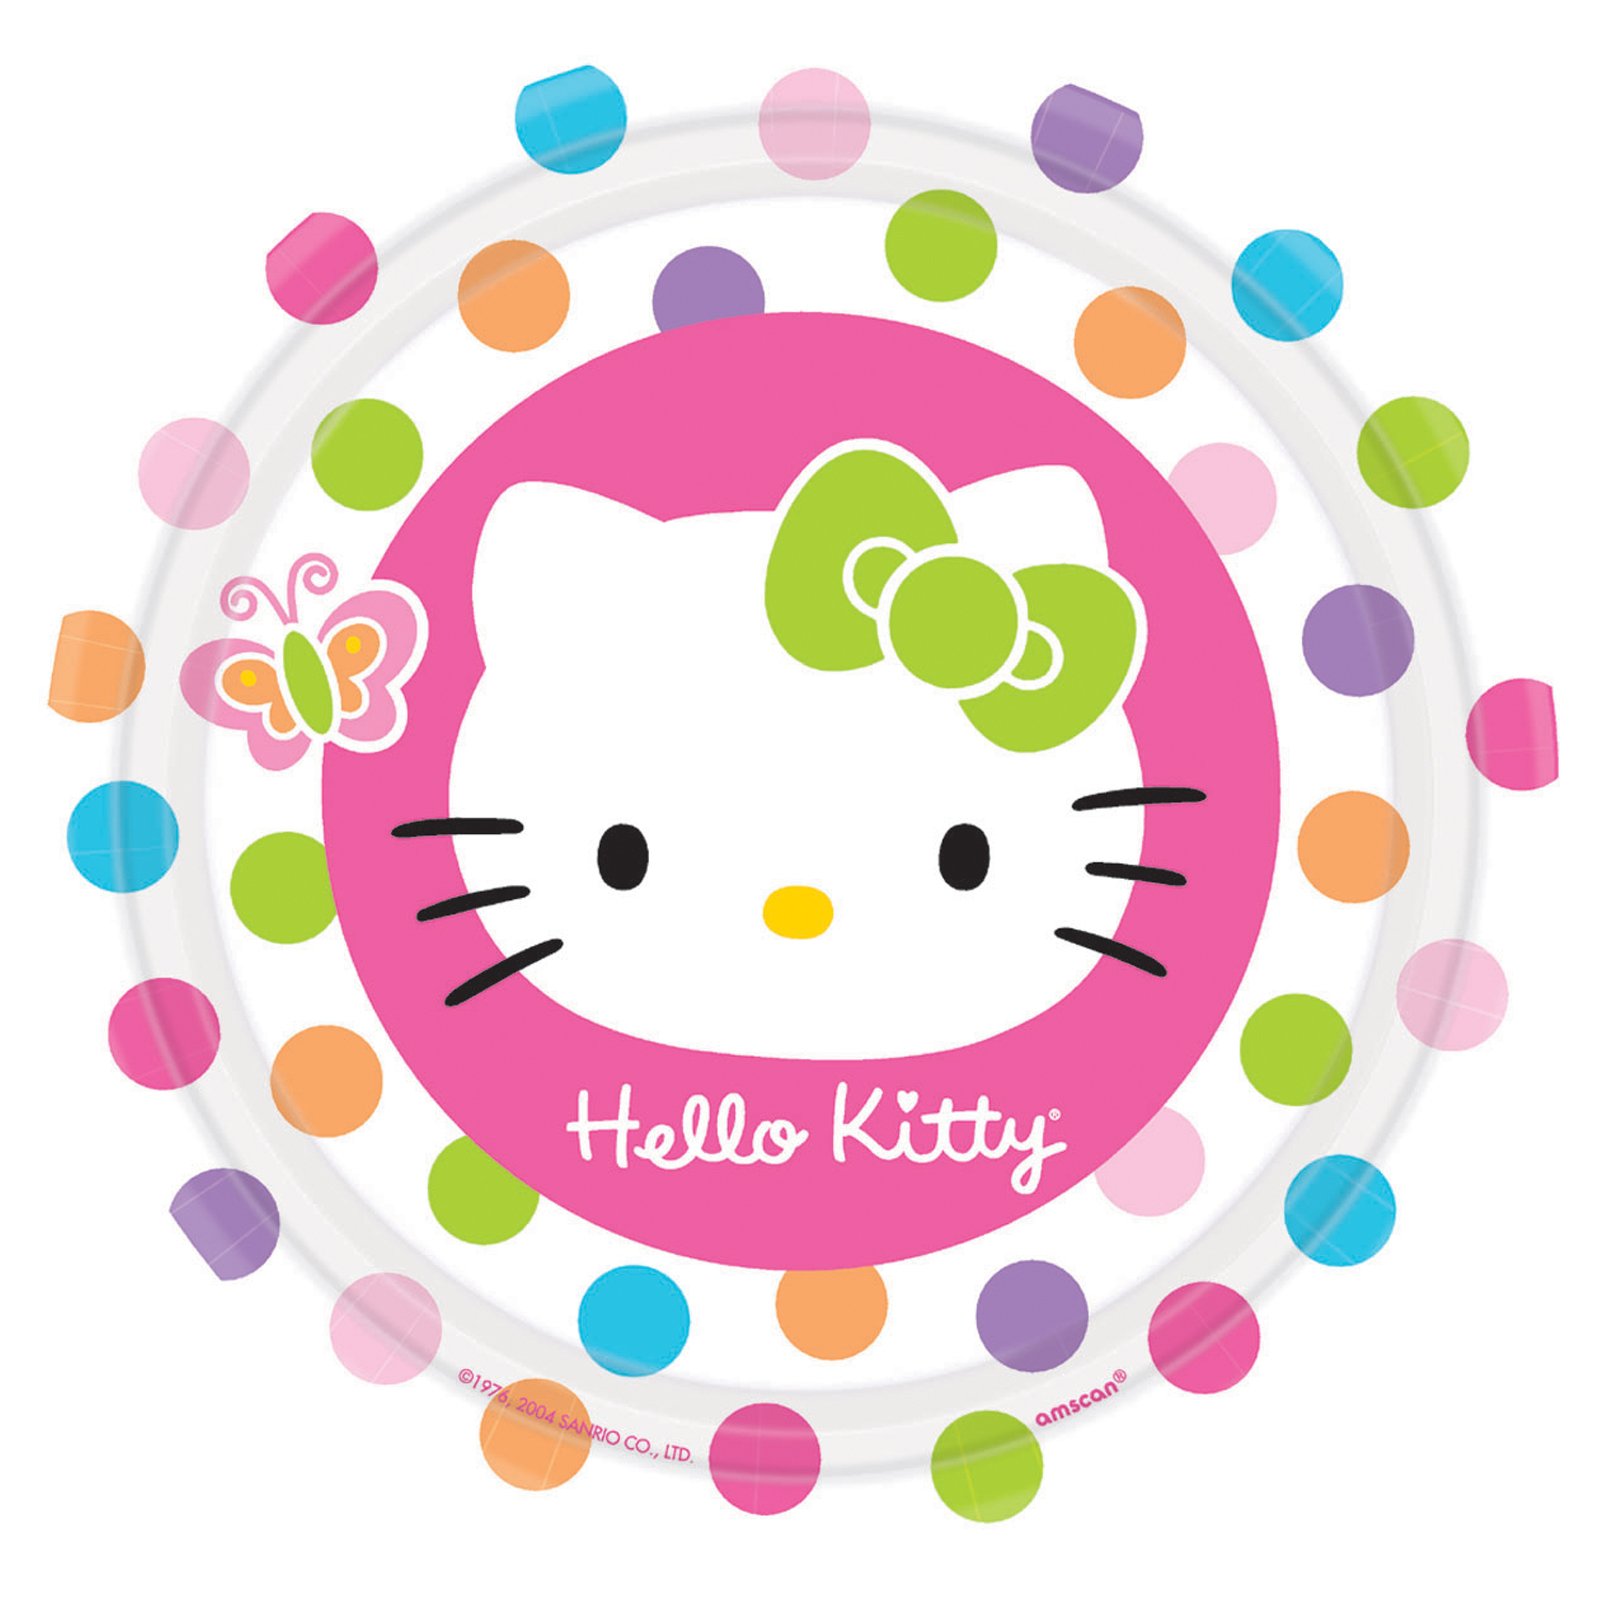 Im Genes De Hello Kitty Todo